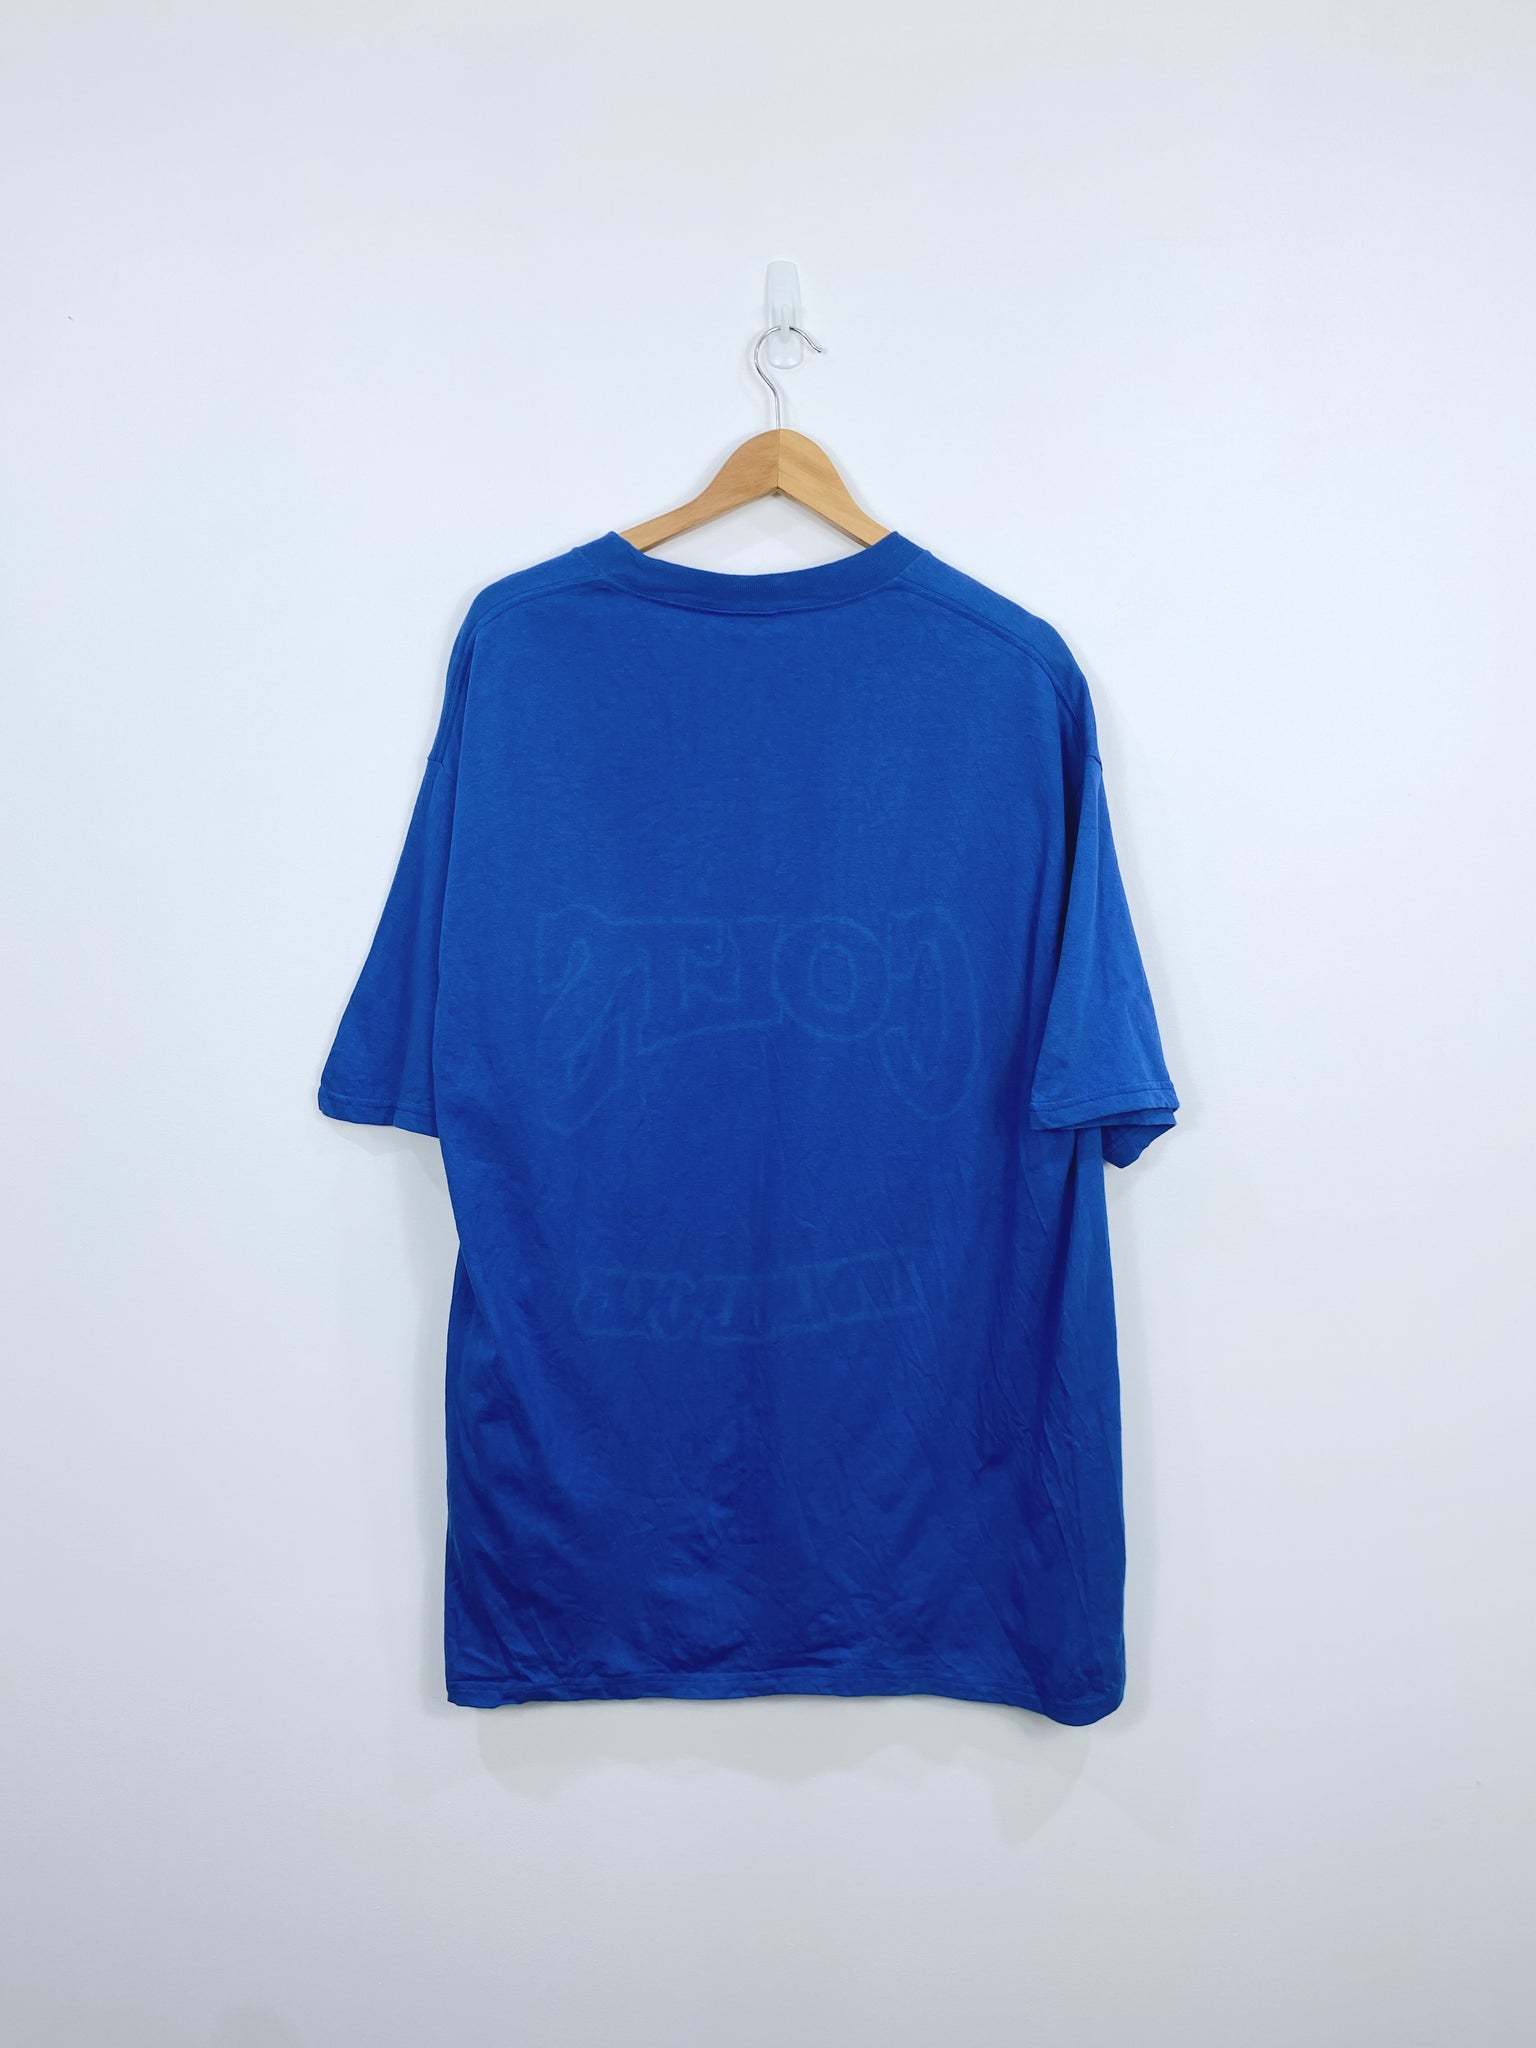 Vintage 1998 Indianapolis Colts T-shirt XL